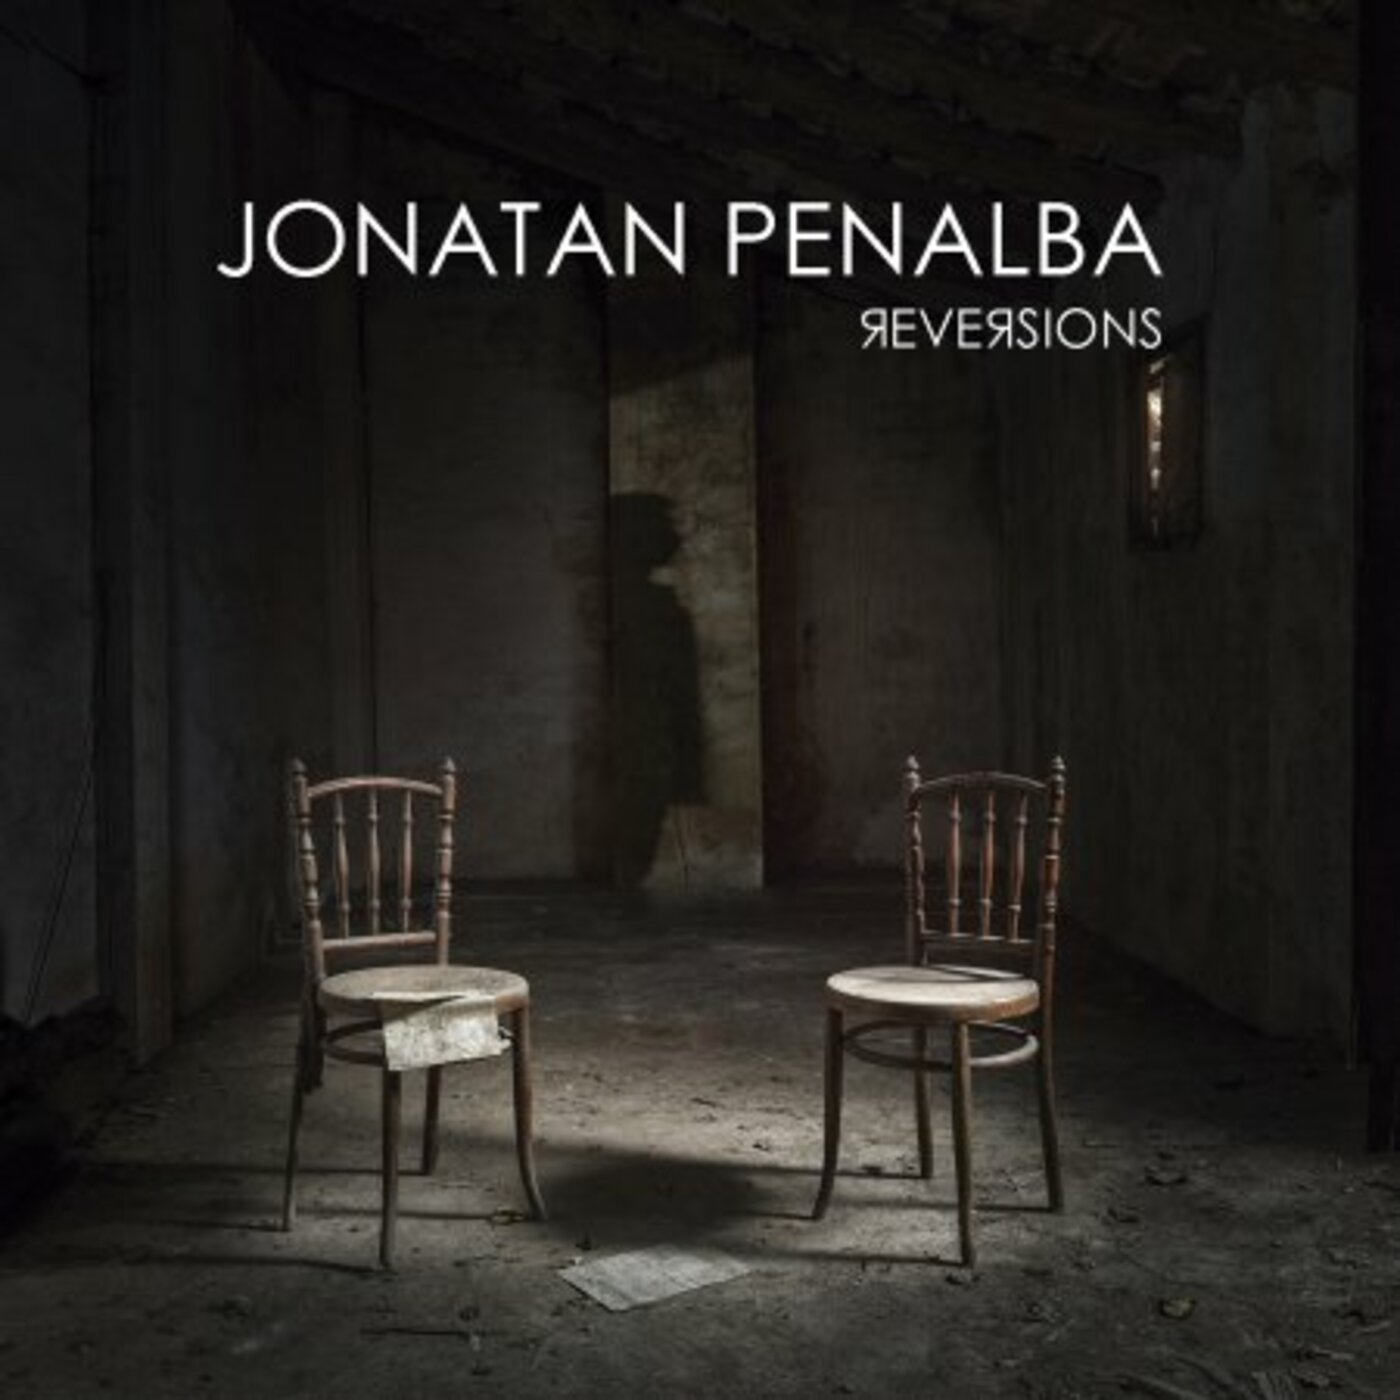 Jonatan Penalba - Reversions | musica en valencià